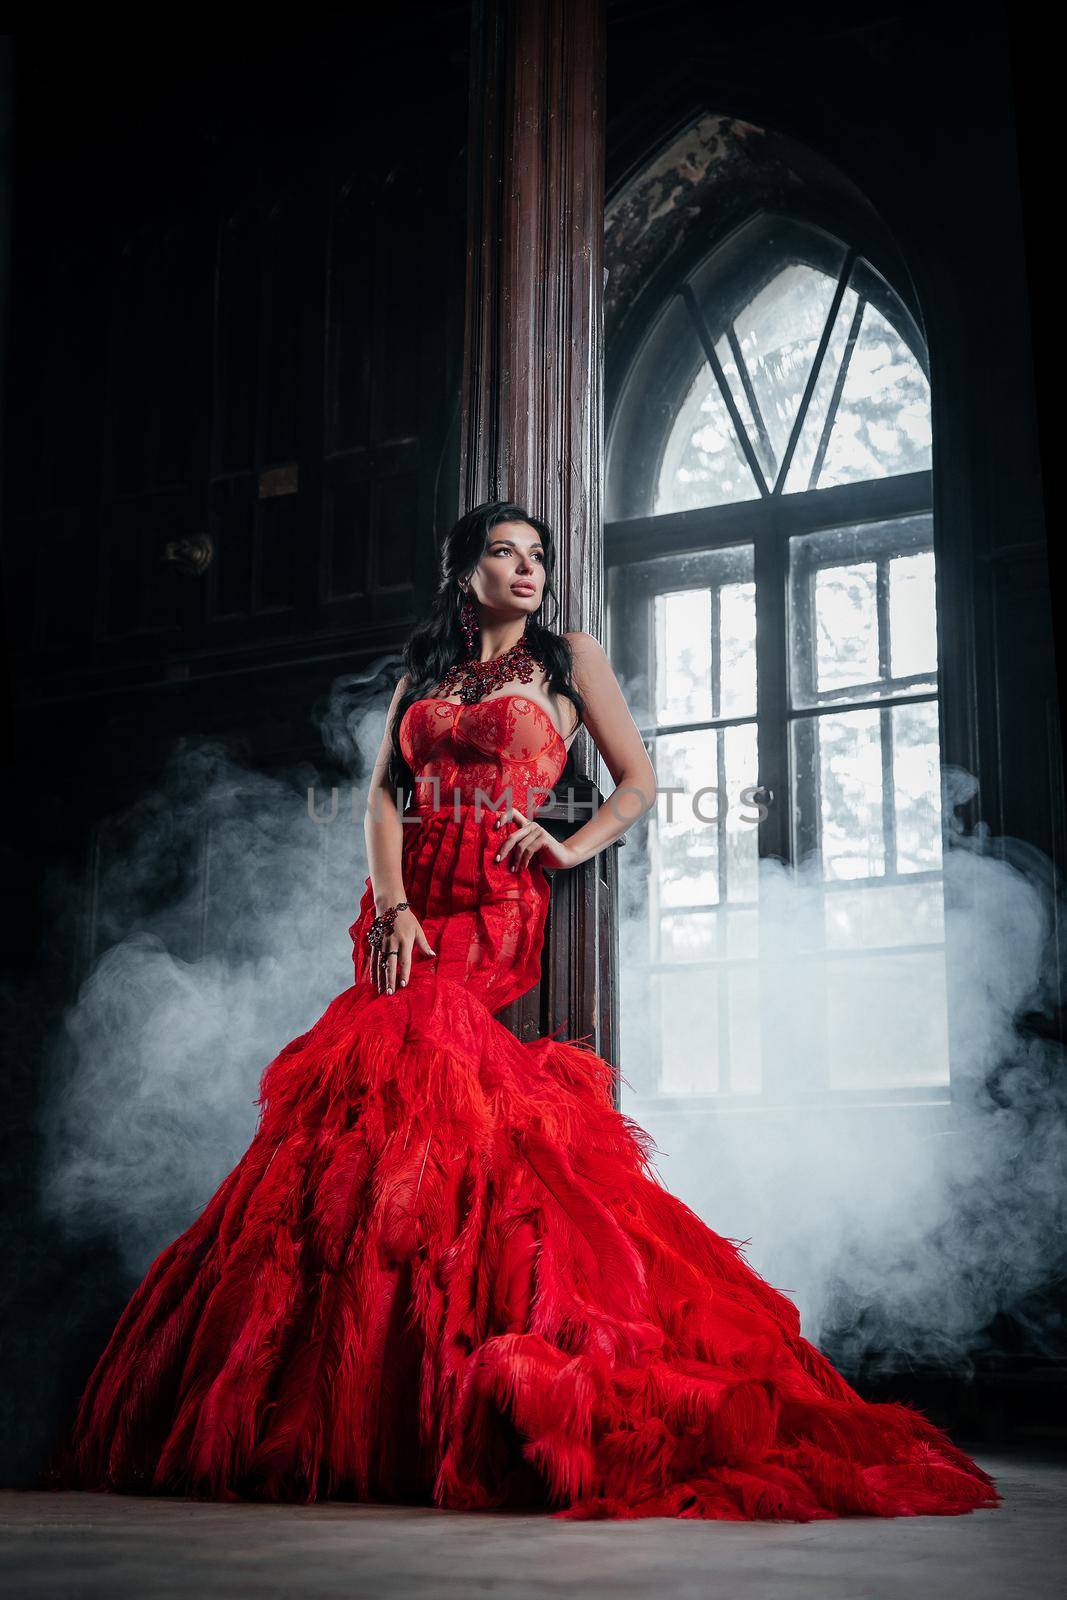 Woman Vintage Red Dress Old Castle Beautiful Princess In Seductive Dress Elegant Caucasian Female Fairy Tale story Near Big Window With Smoke Fog